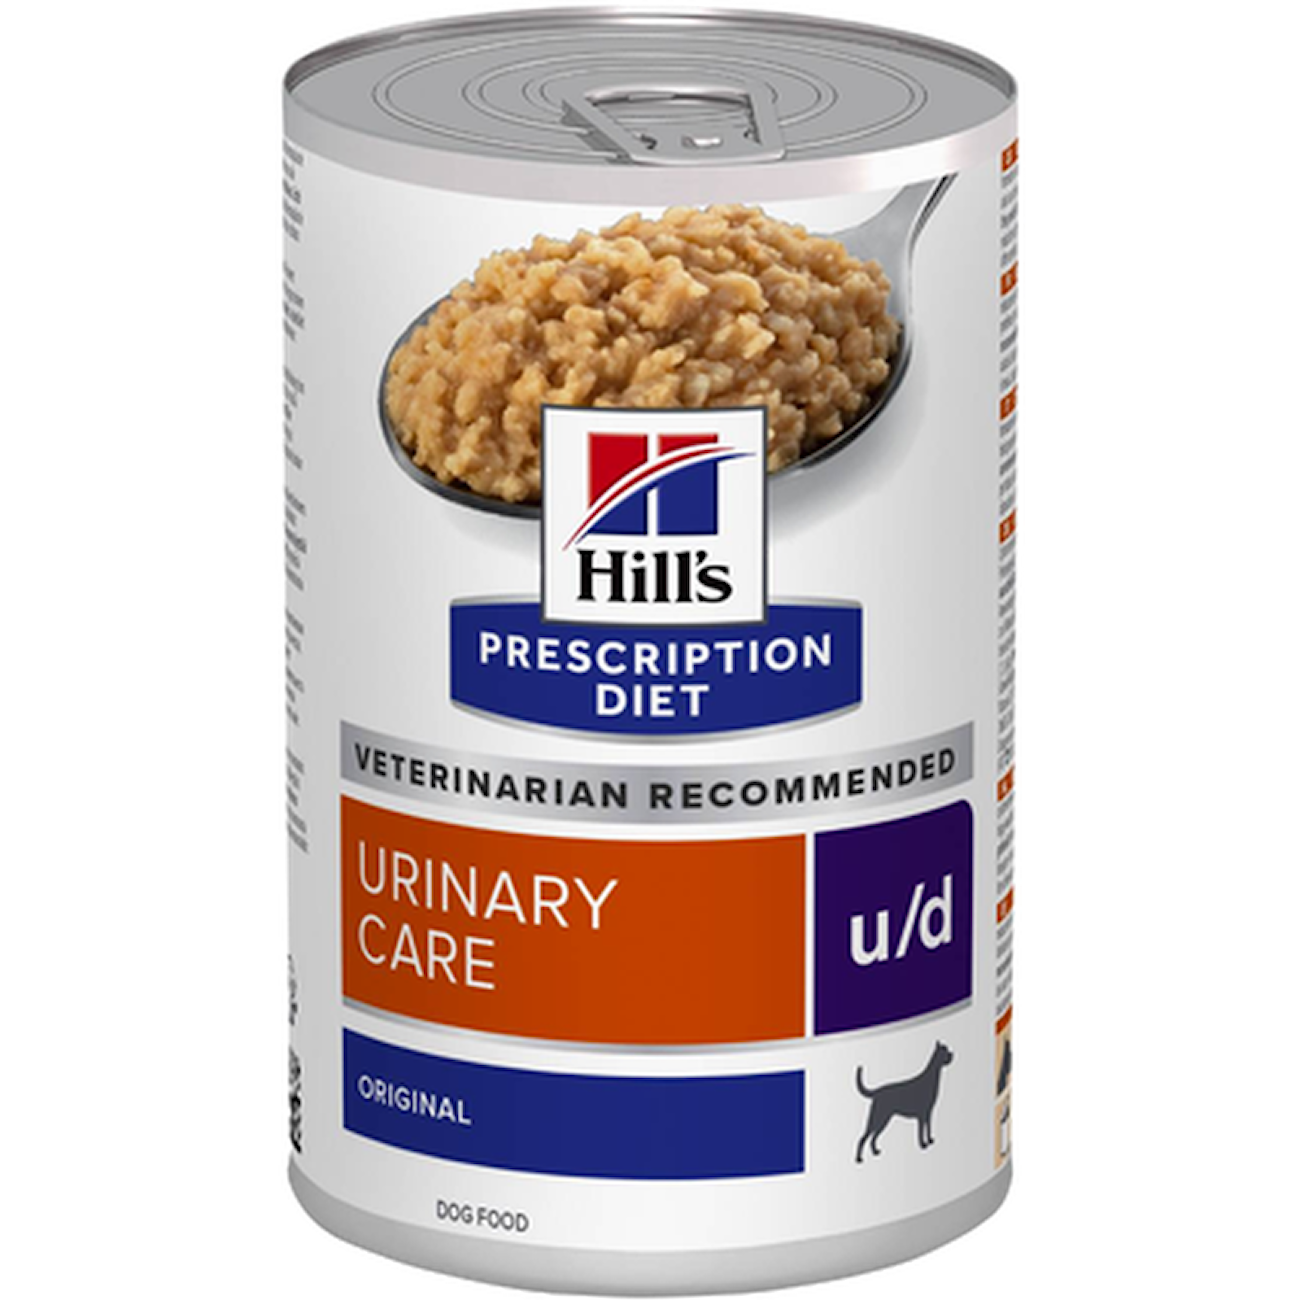 u/d Urinary Care Original Canned - Wet Dog Food